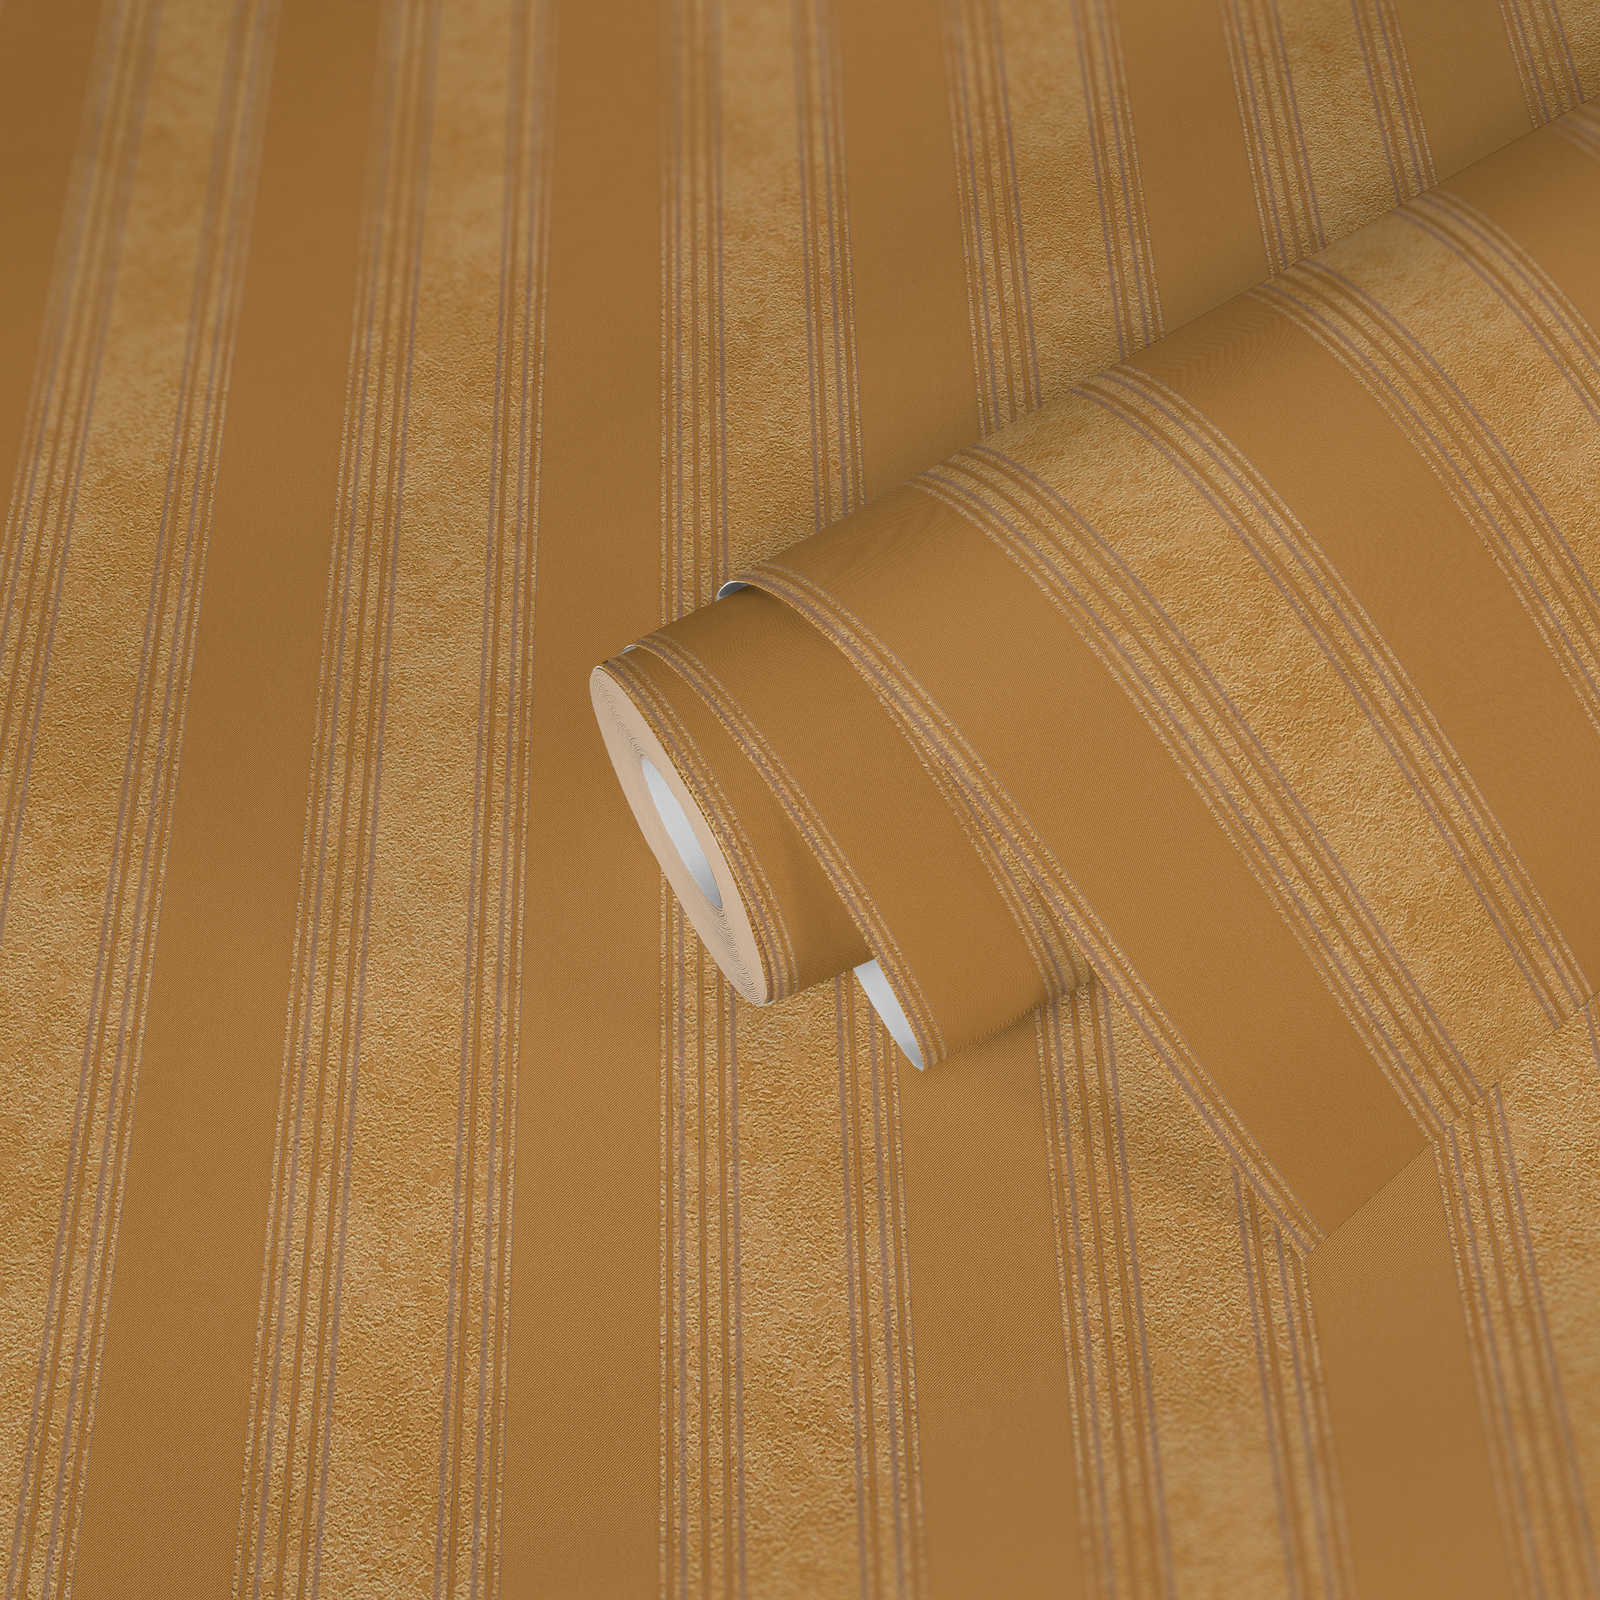             Non-woven wallpaper VERSACE golden stripes & plaster texture - metallic
        